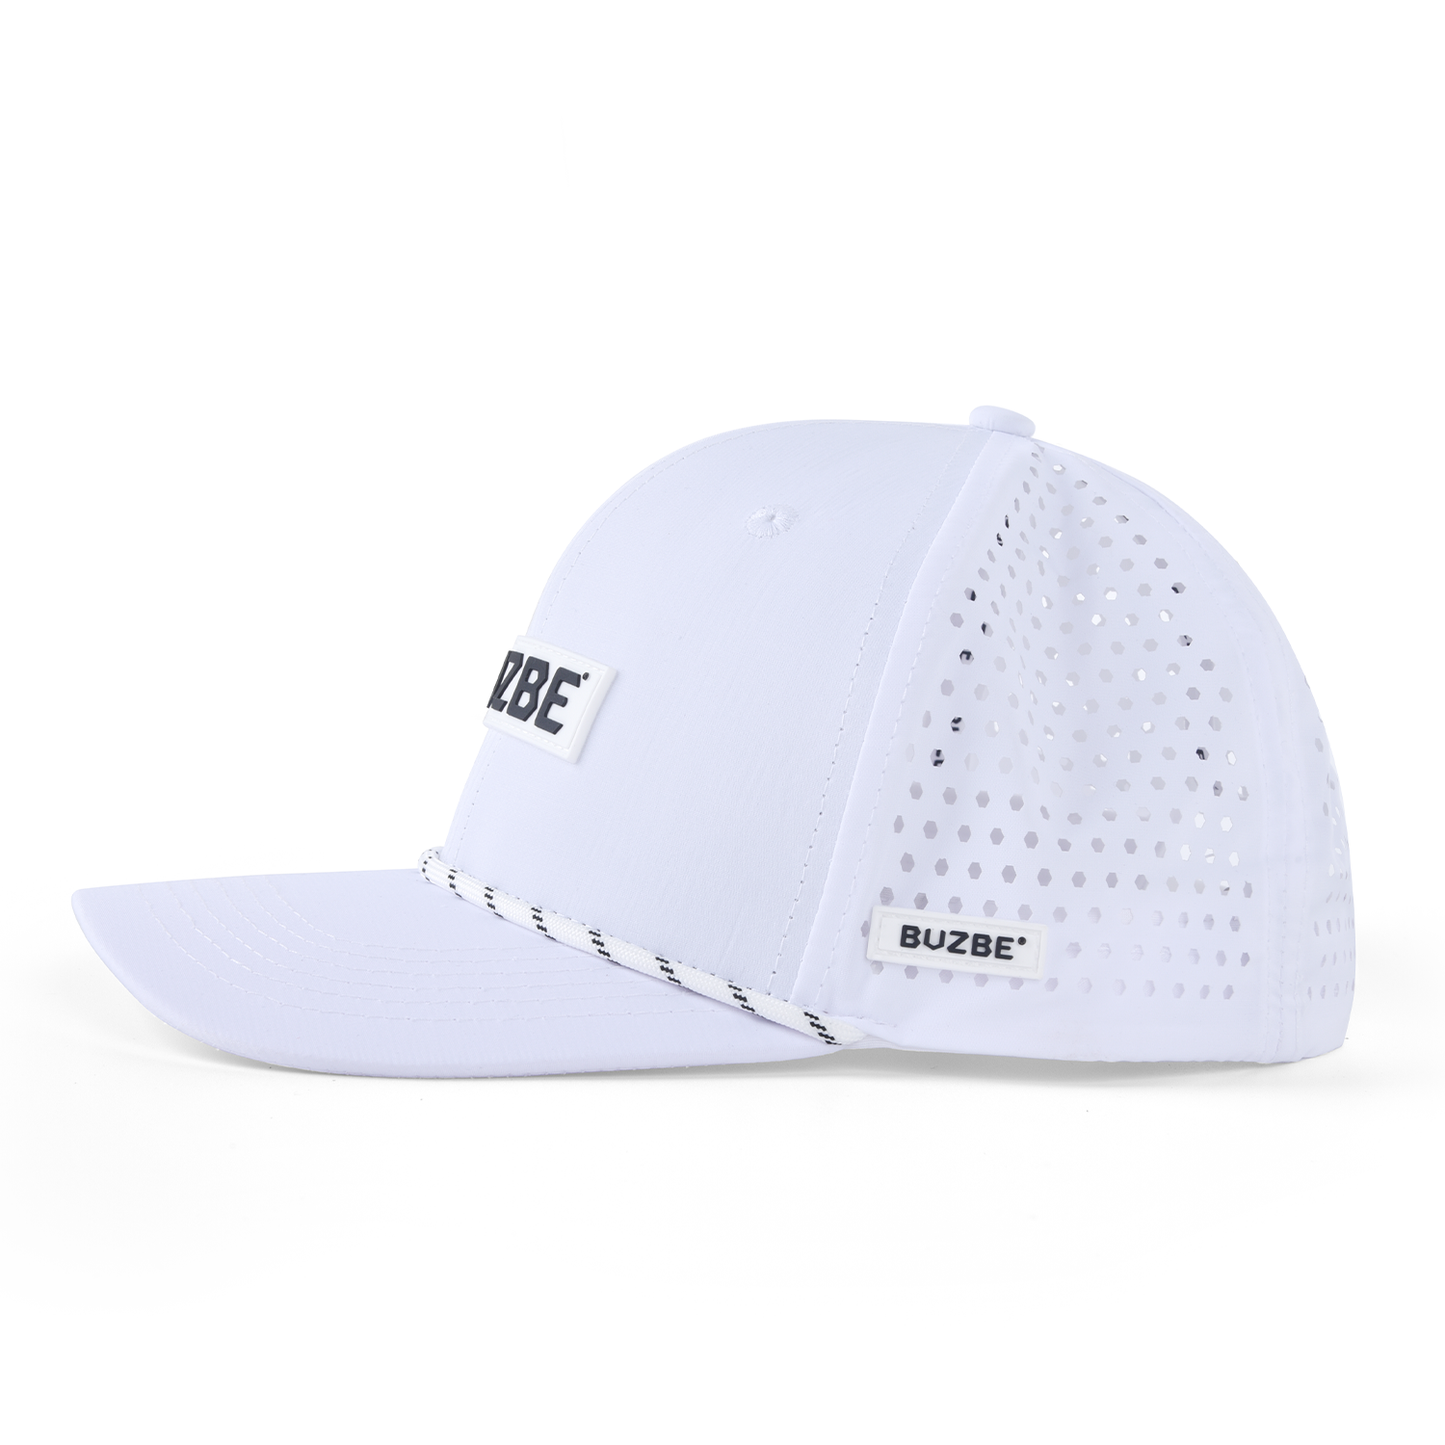 BUZBE Badge Performance Trucker Hat - White